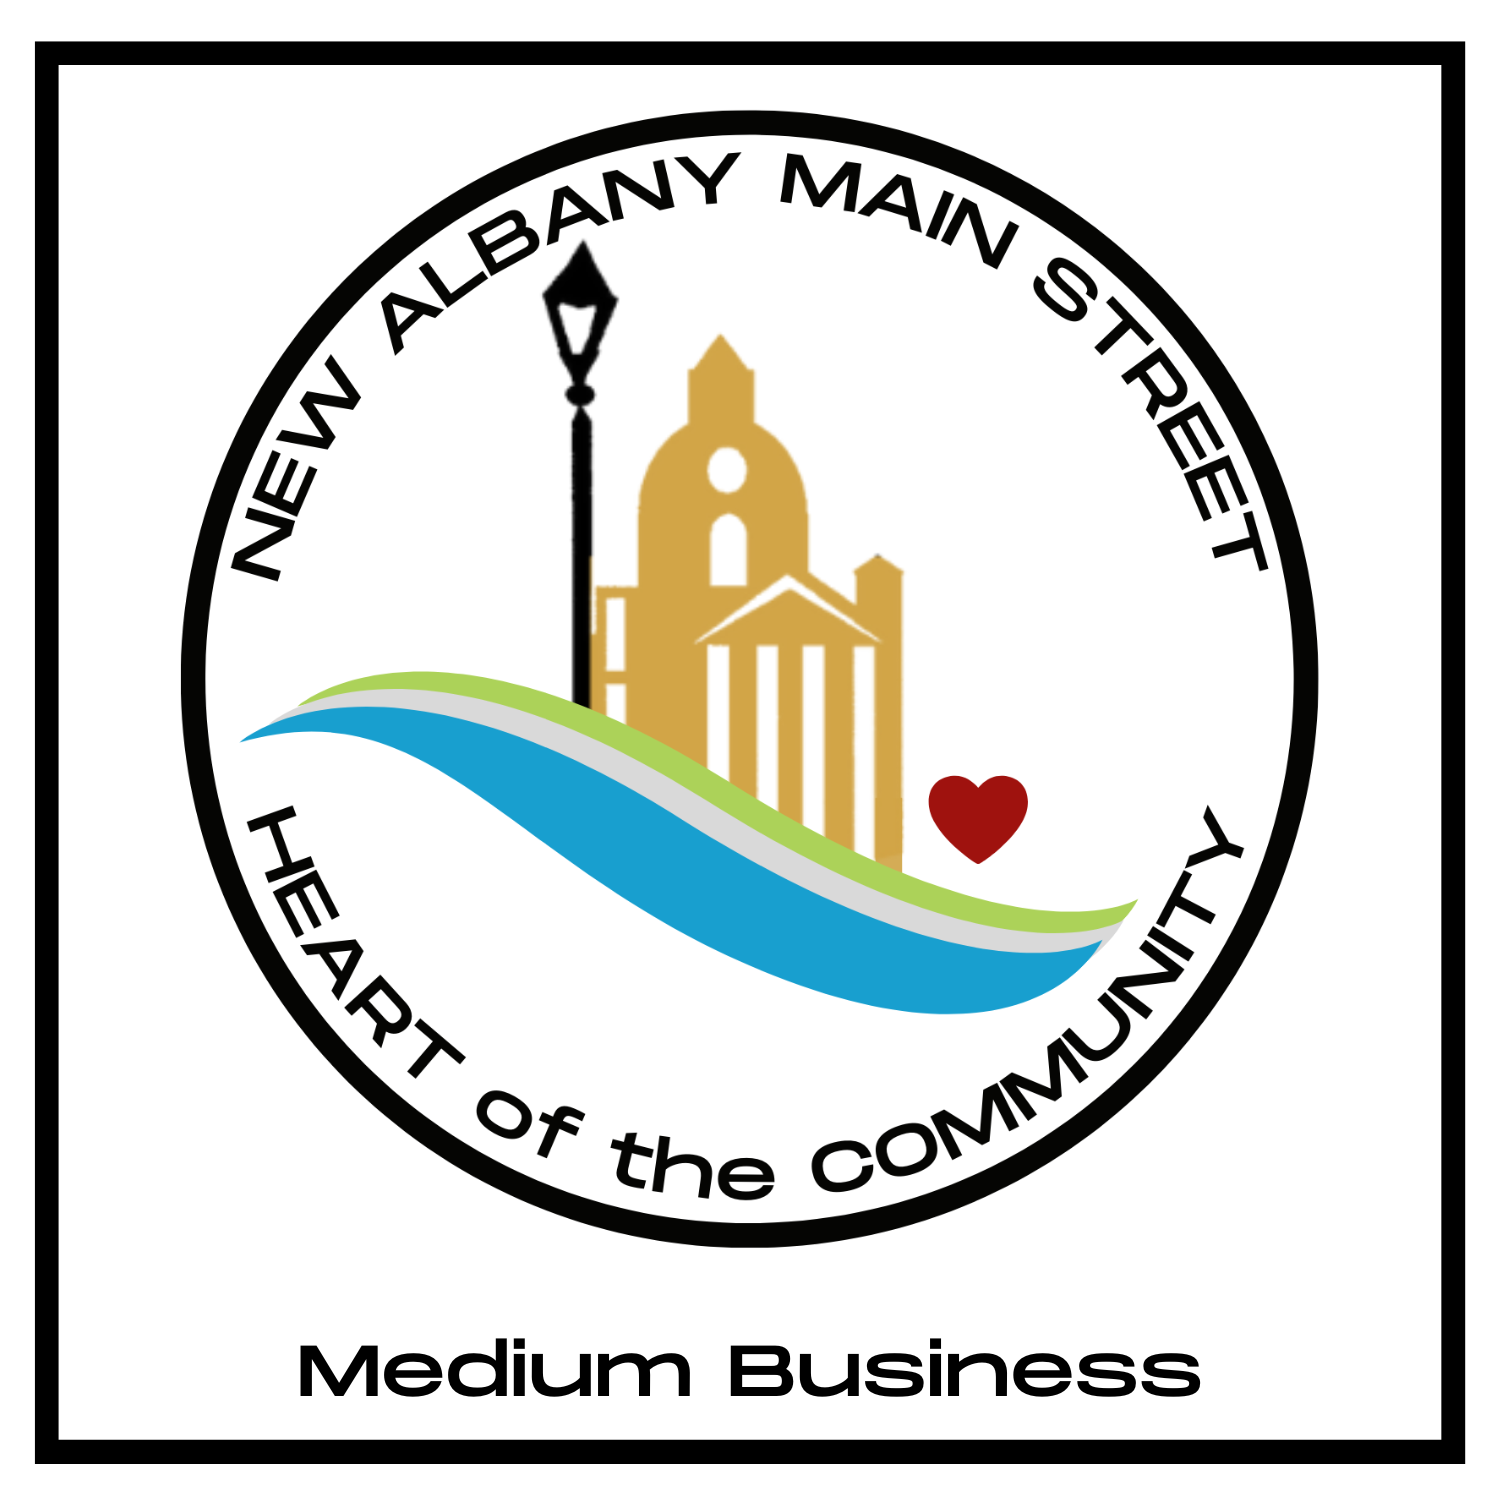 Medium Business Main Street Partnership